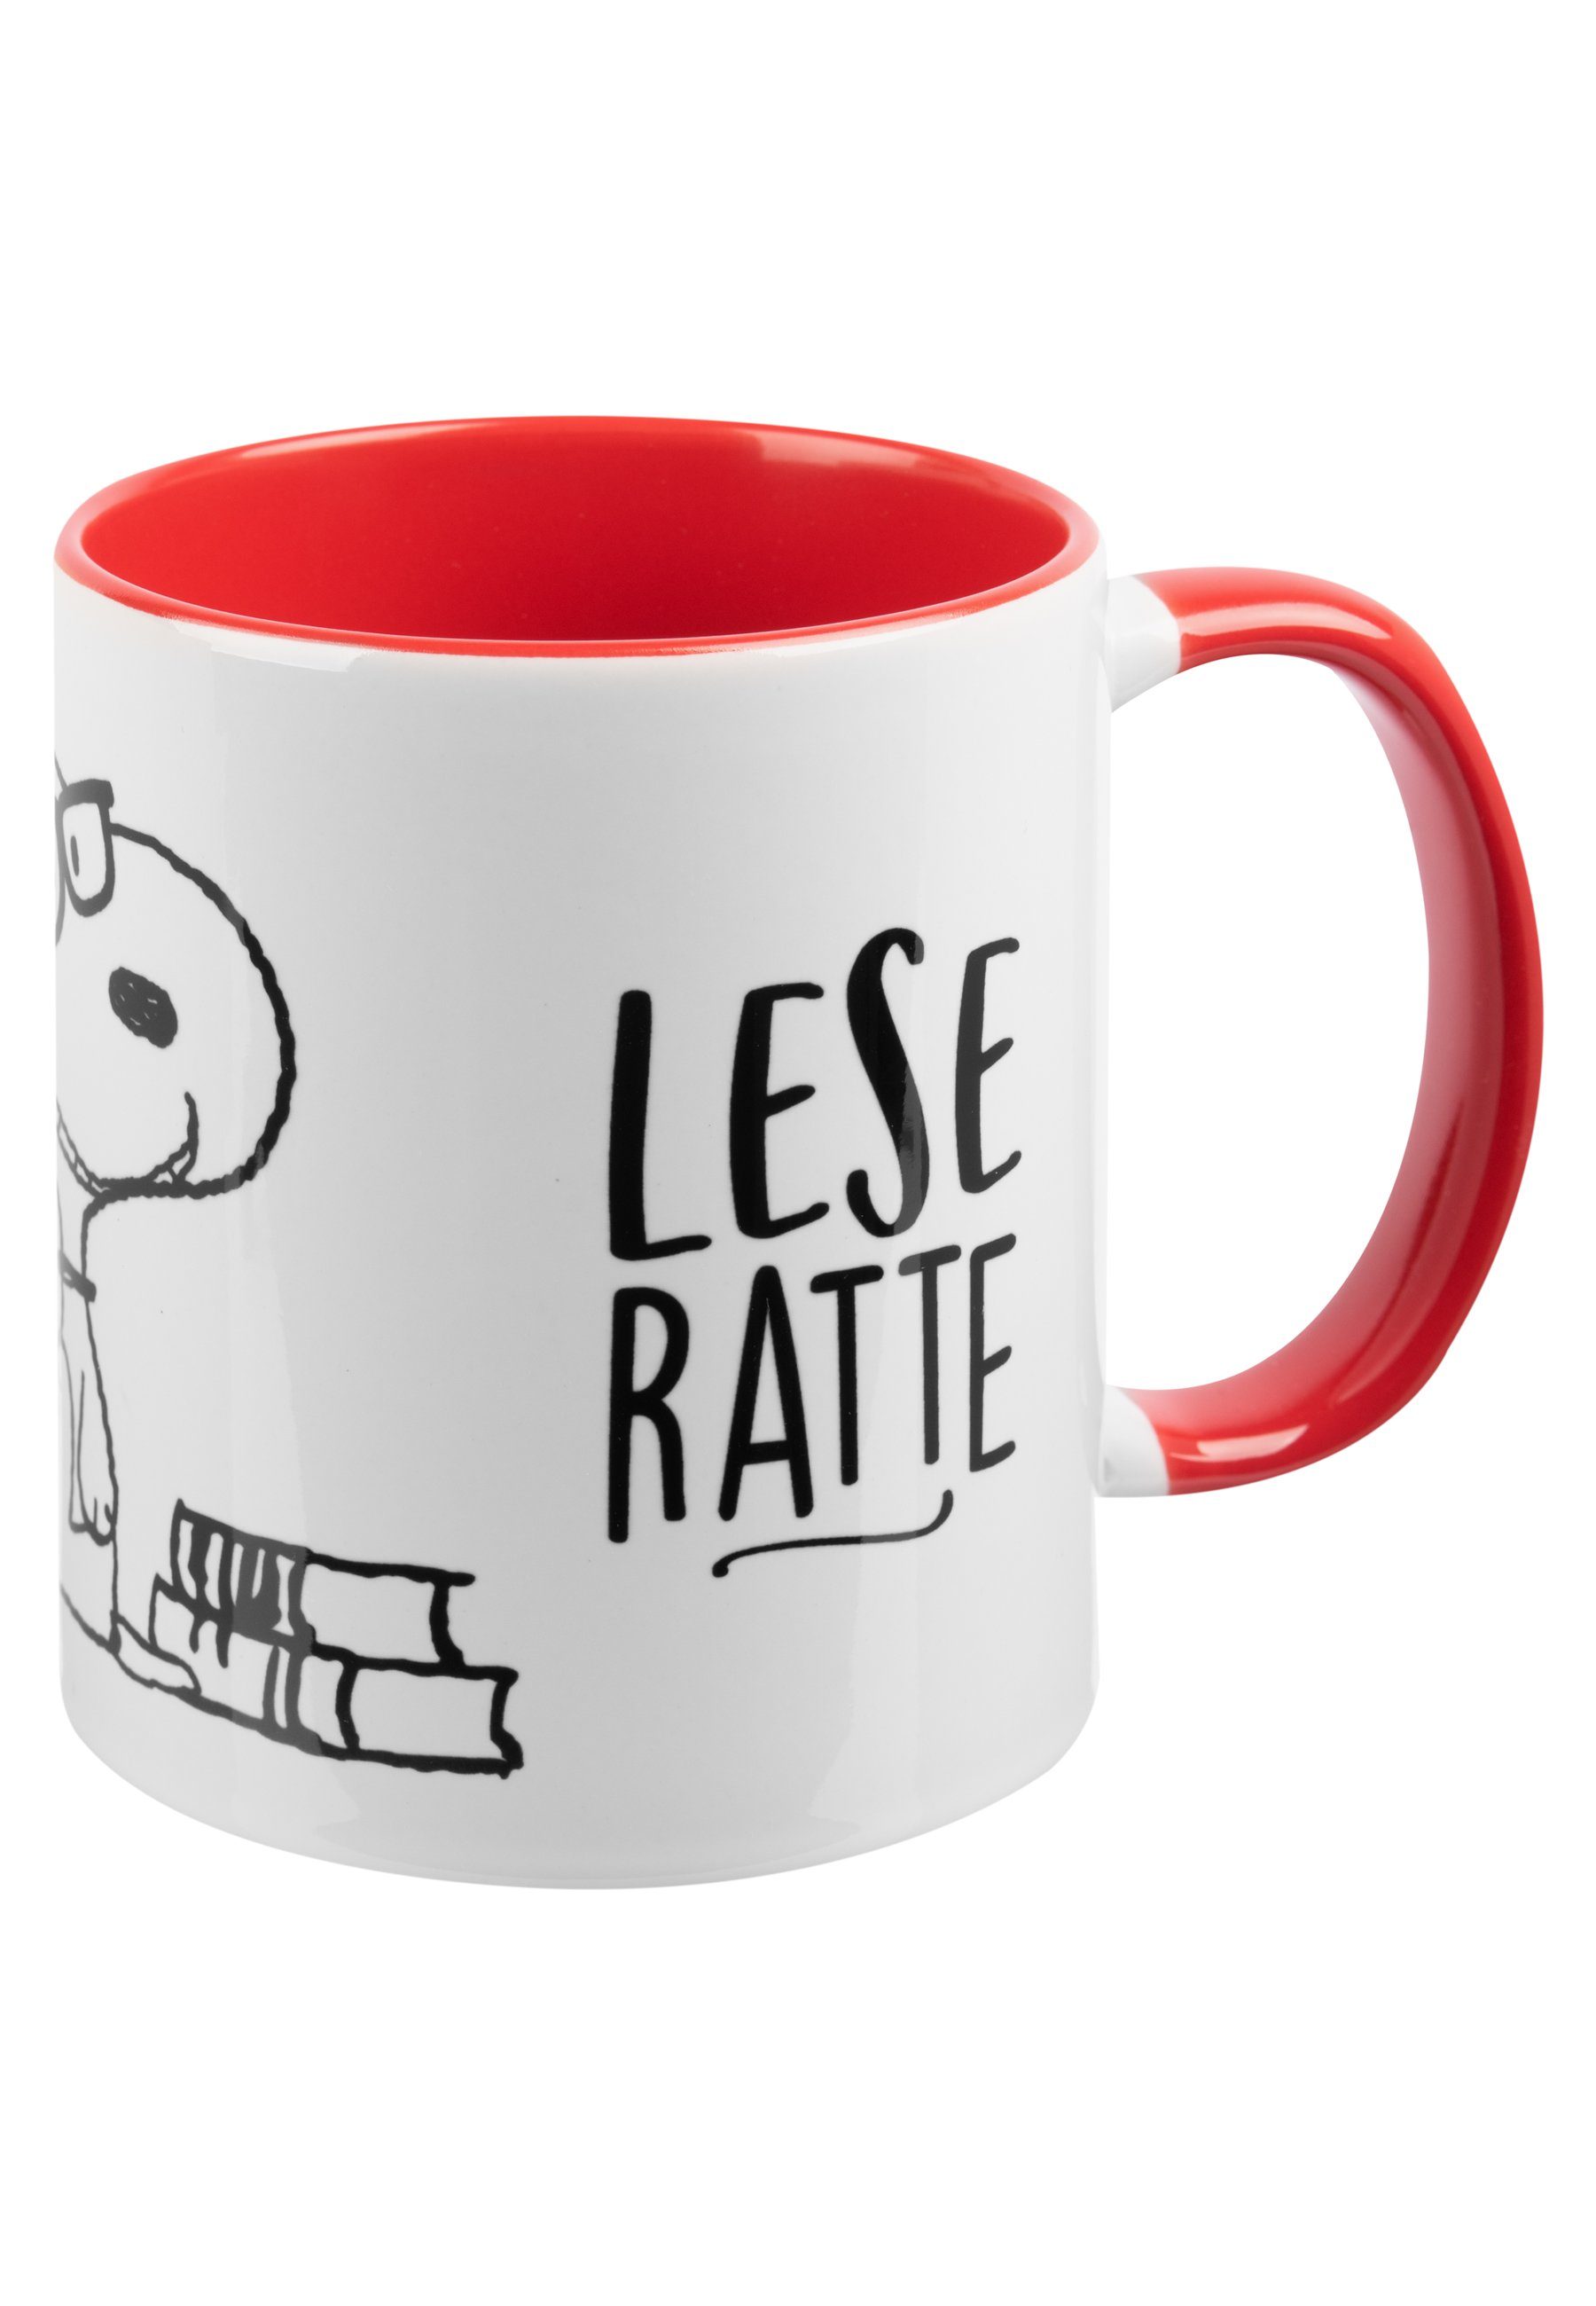 Rot - Snoopy Tasse Peanuts Weiß United Kaffeetasse The Leseratte Tasse ml, 320 Labels® Keramik